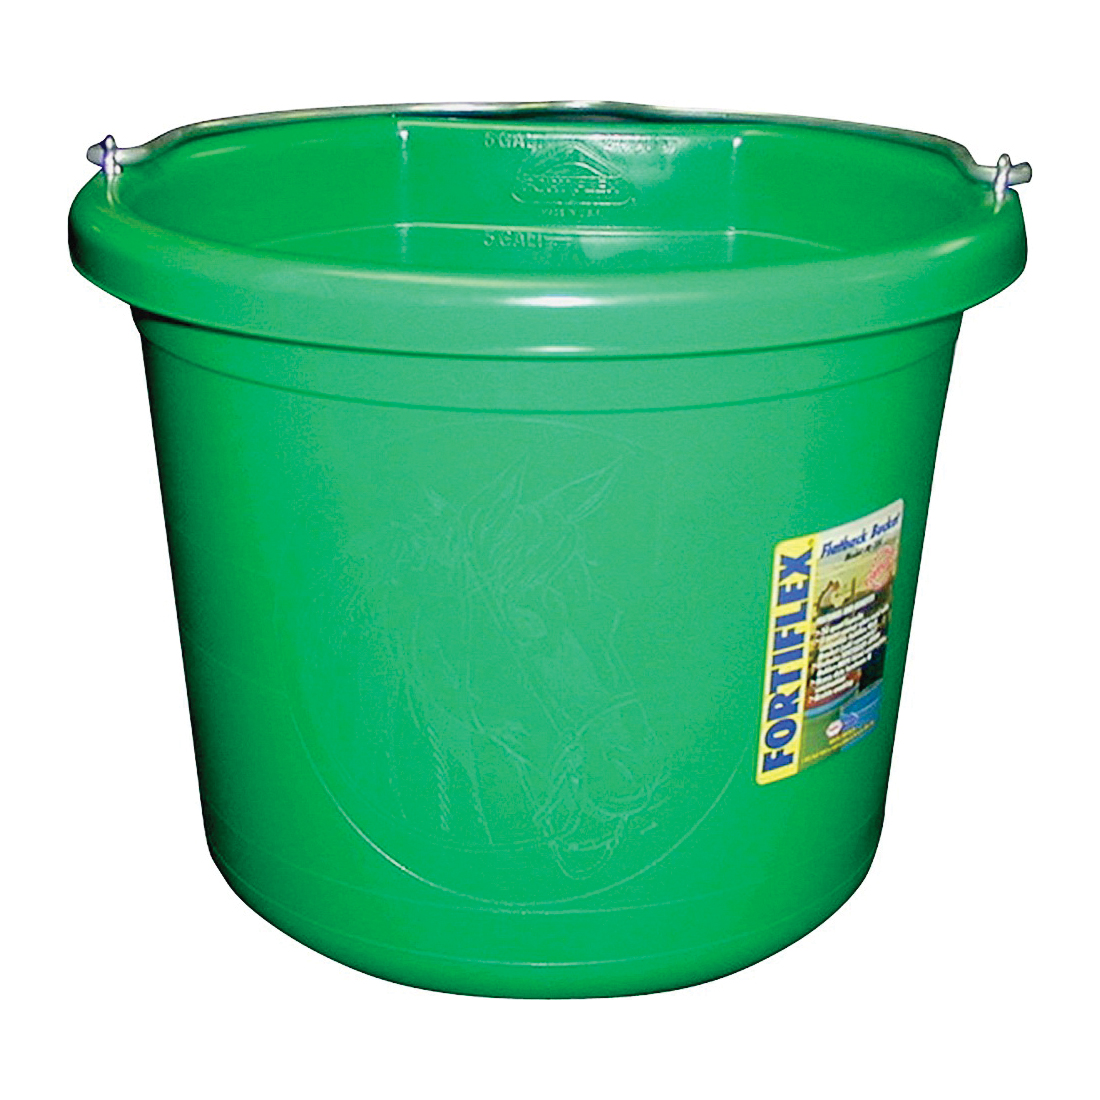 FB-124 Series FB-124GR Bucket, 24 qt Volume, Rubber/Polyethylene, Green